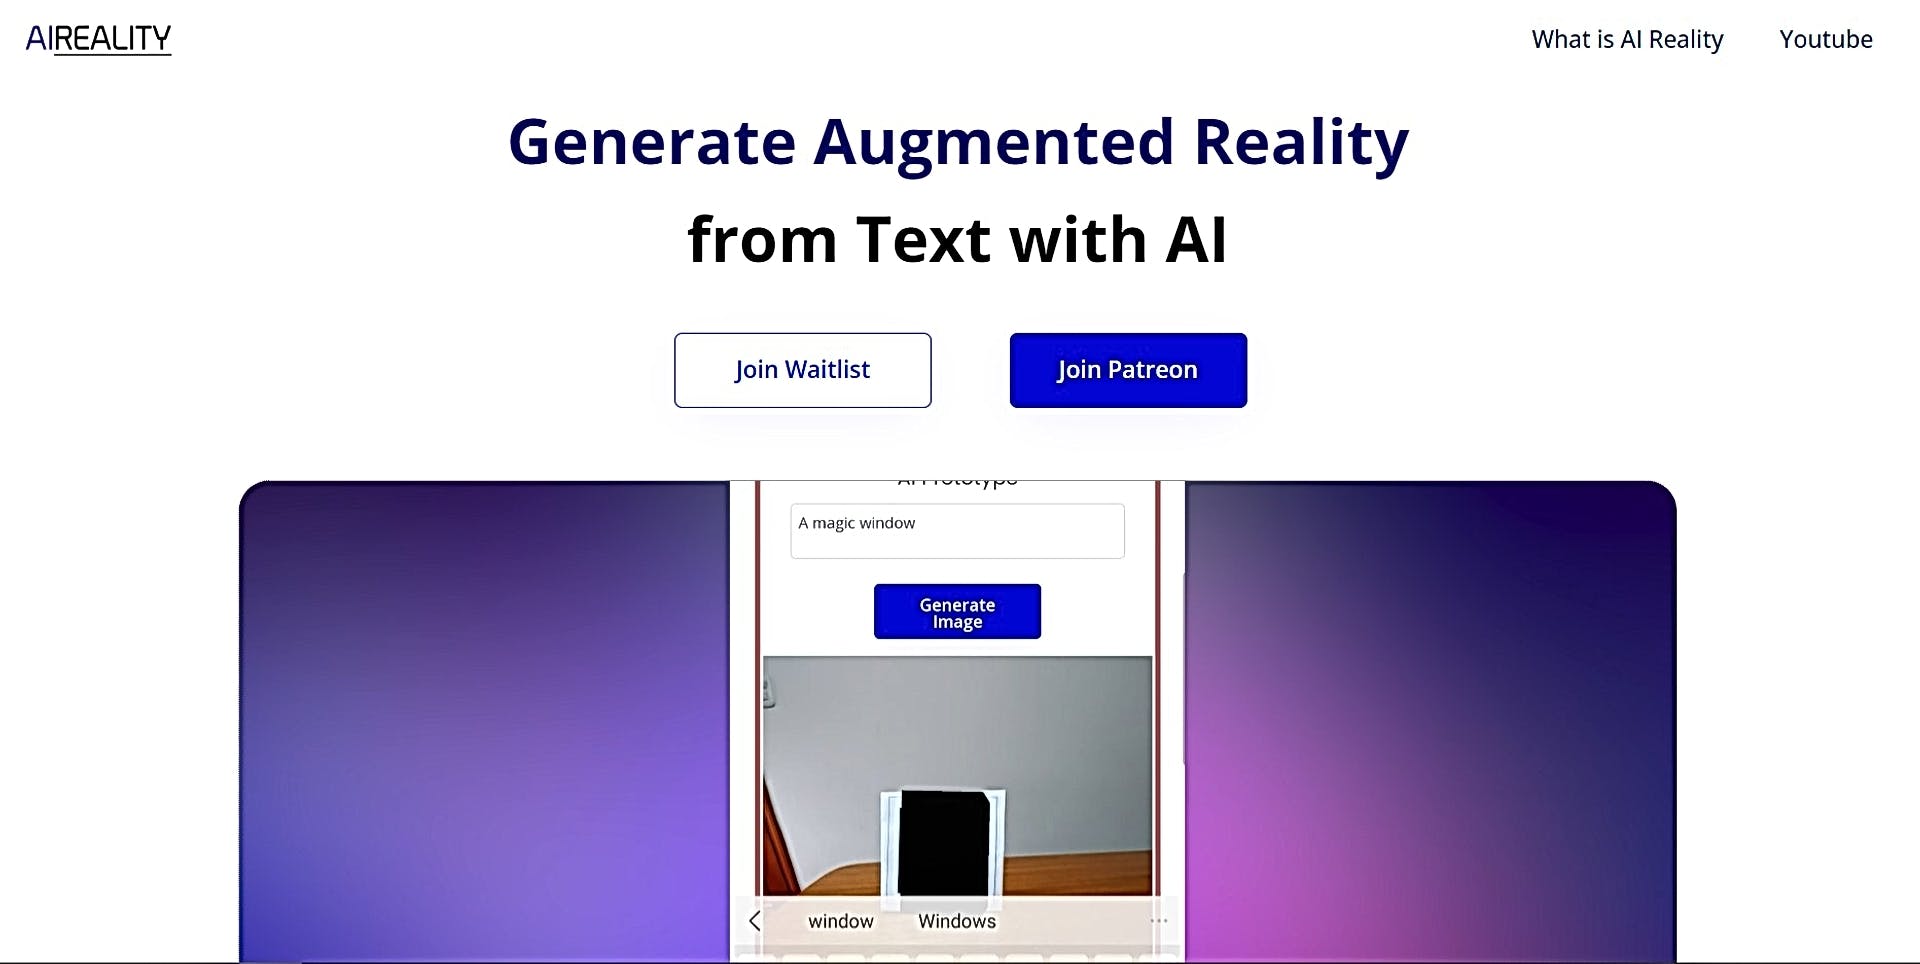 AI Reality featured